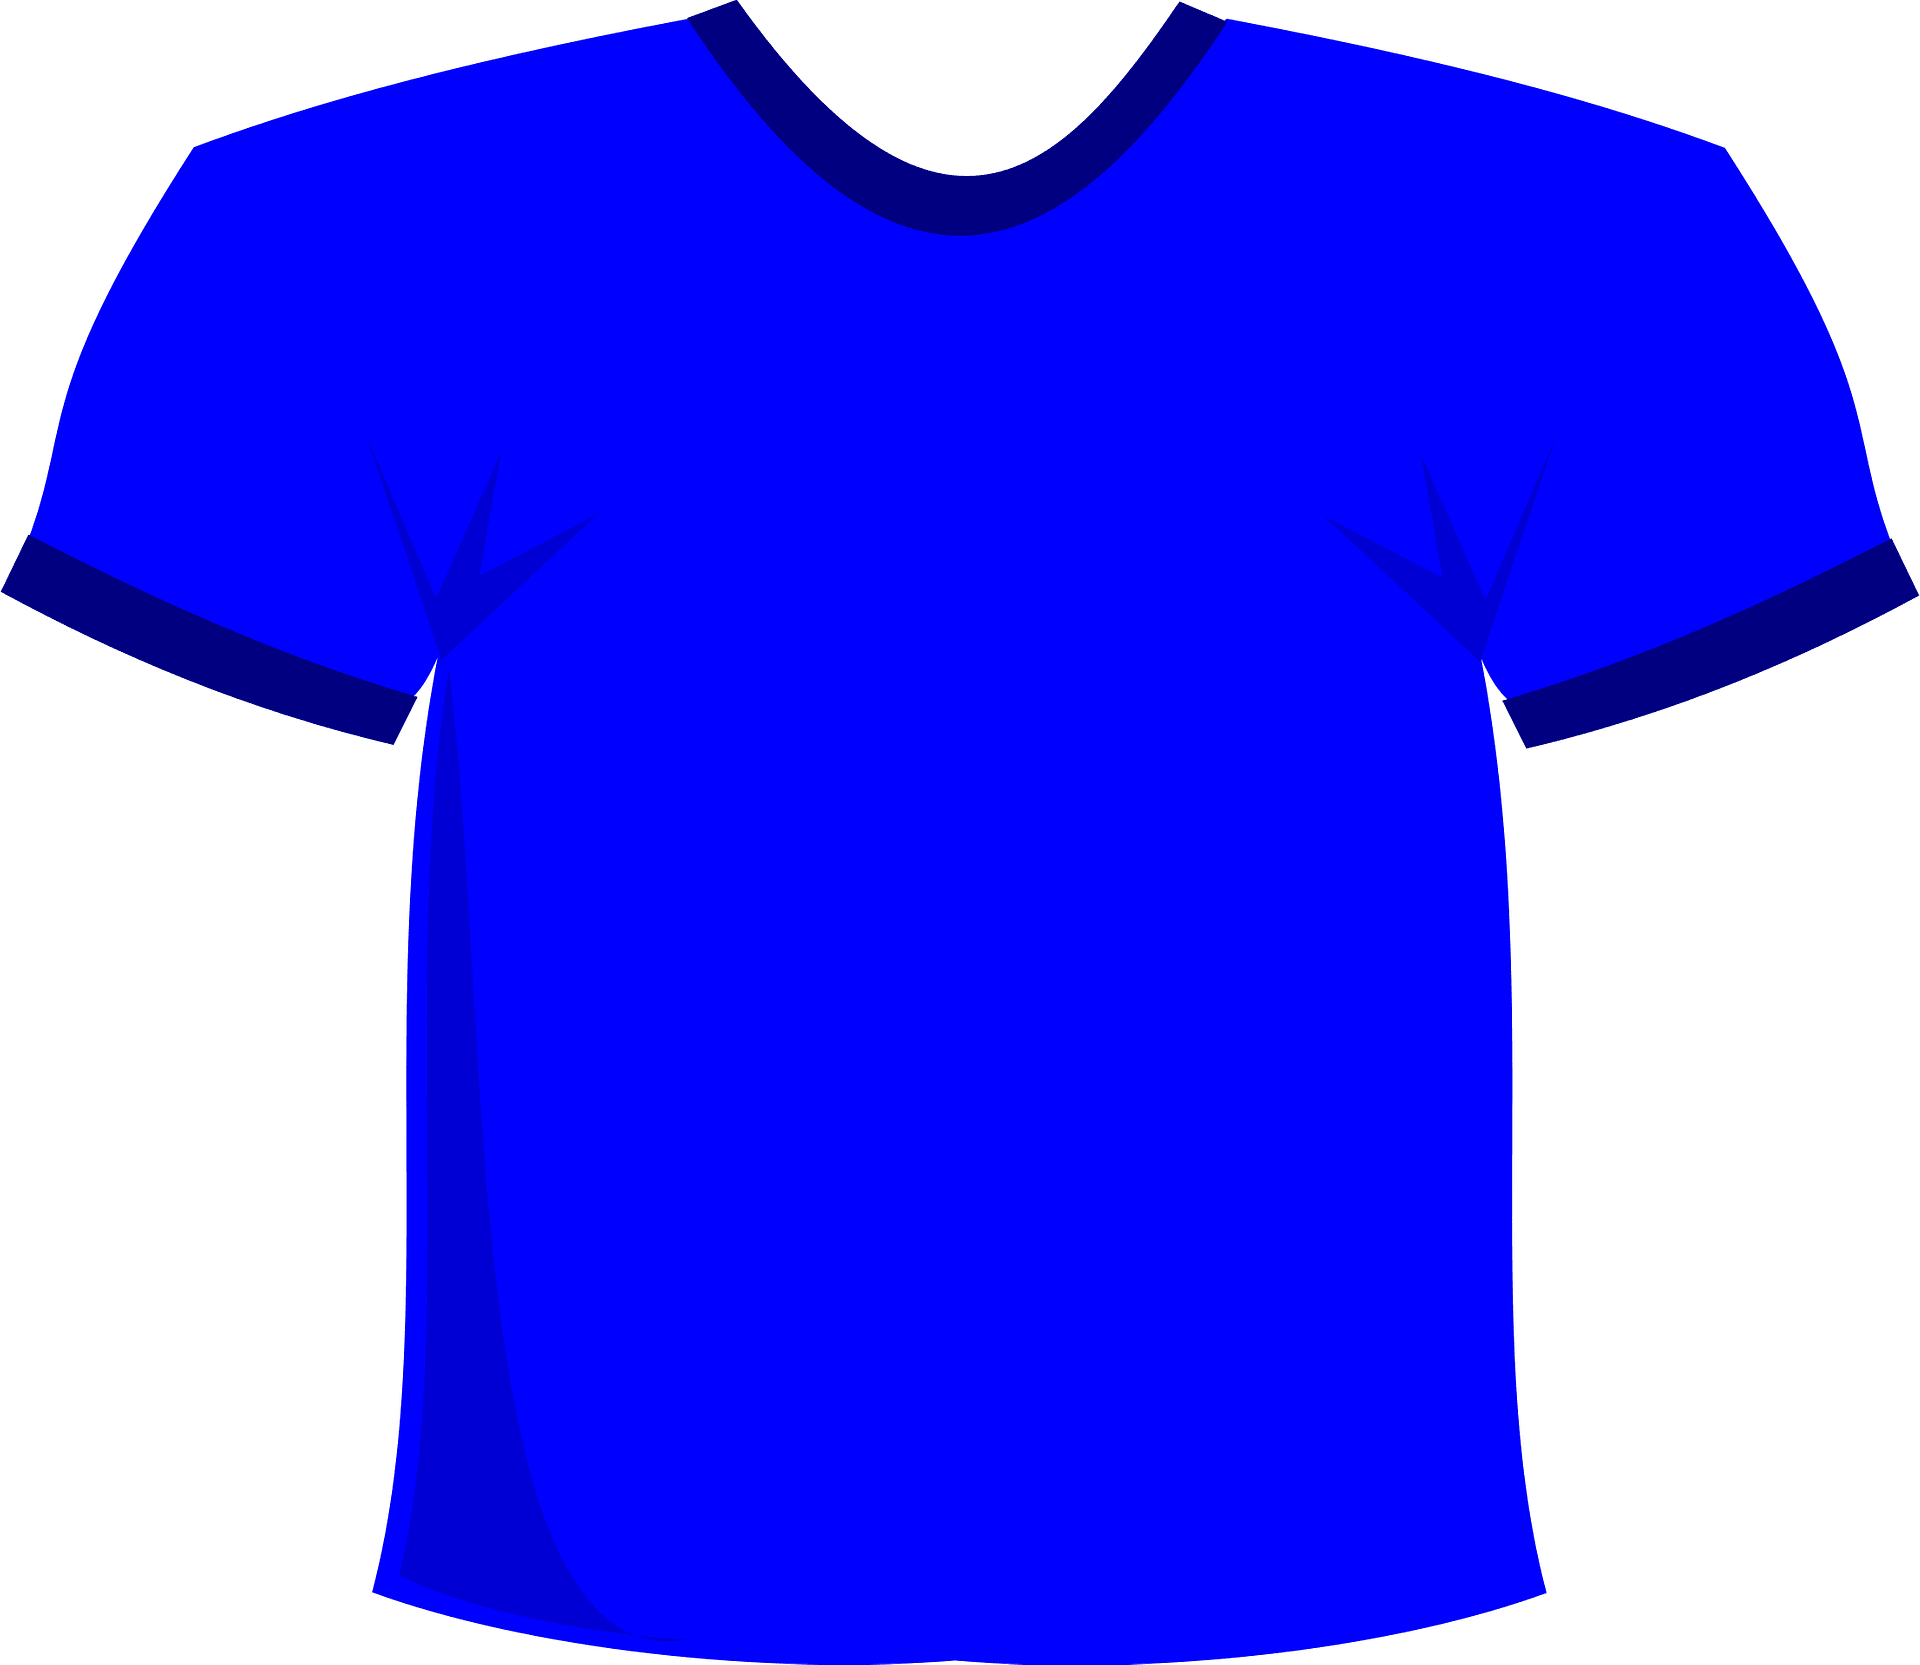 T-Shirt PNG Transparent Images Free Download - Pngfre